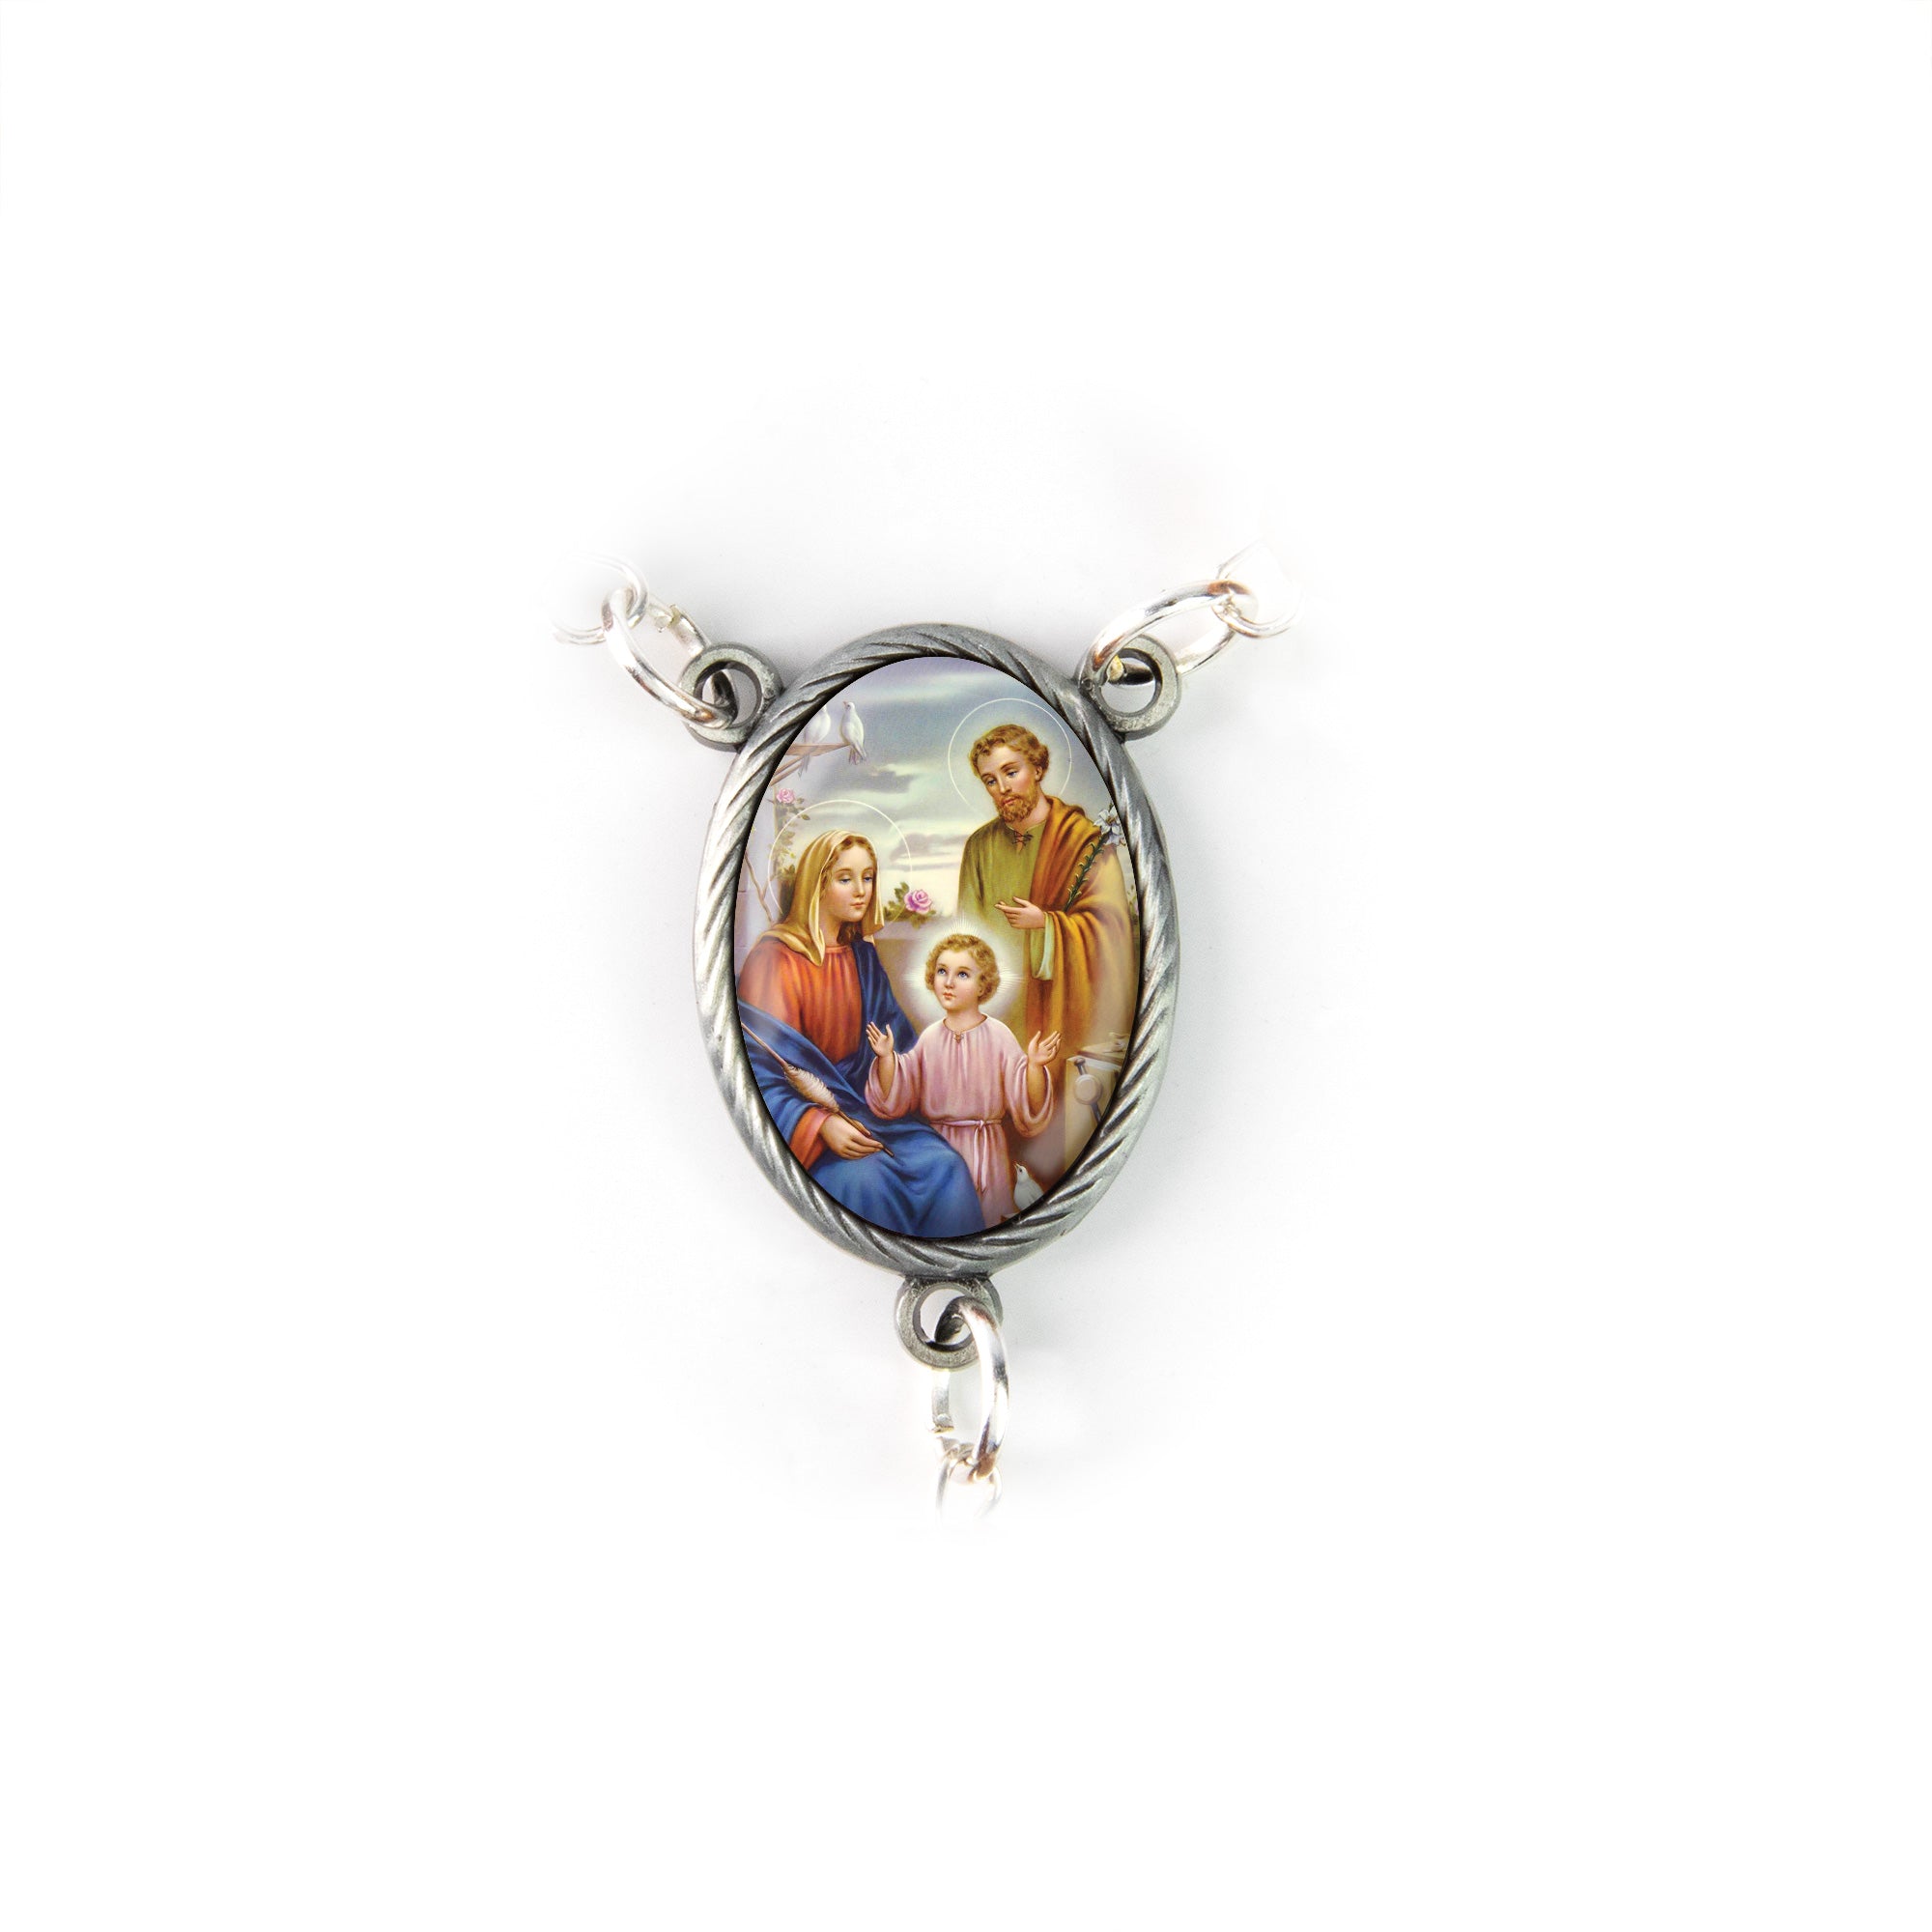 Holy Family, Holy Land Olive Wood Pocket Auto Rosary, Made in Bethlehem icon detail